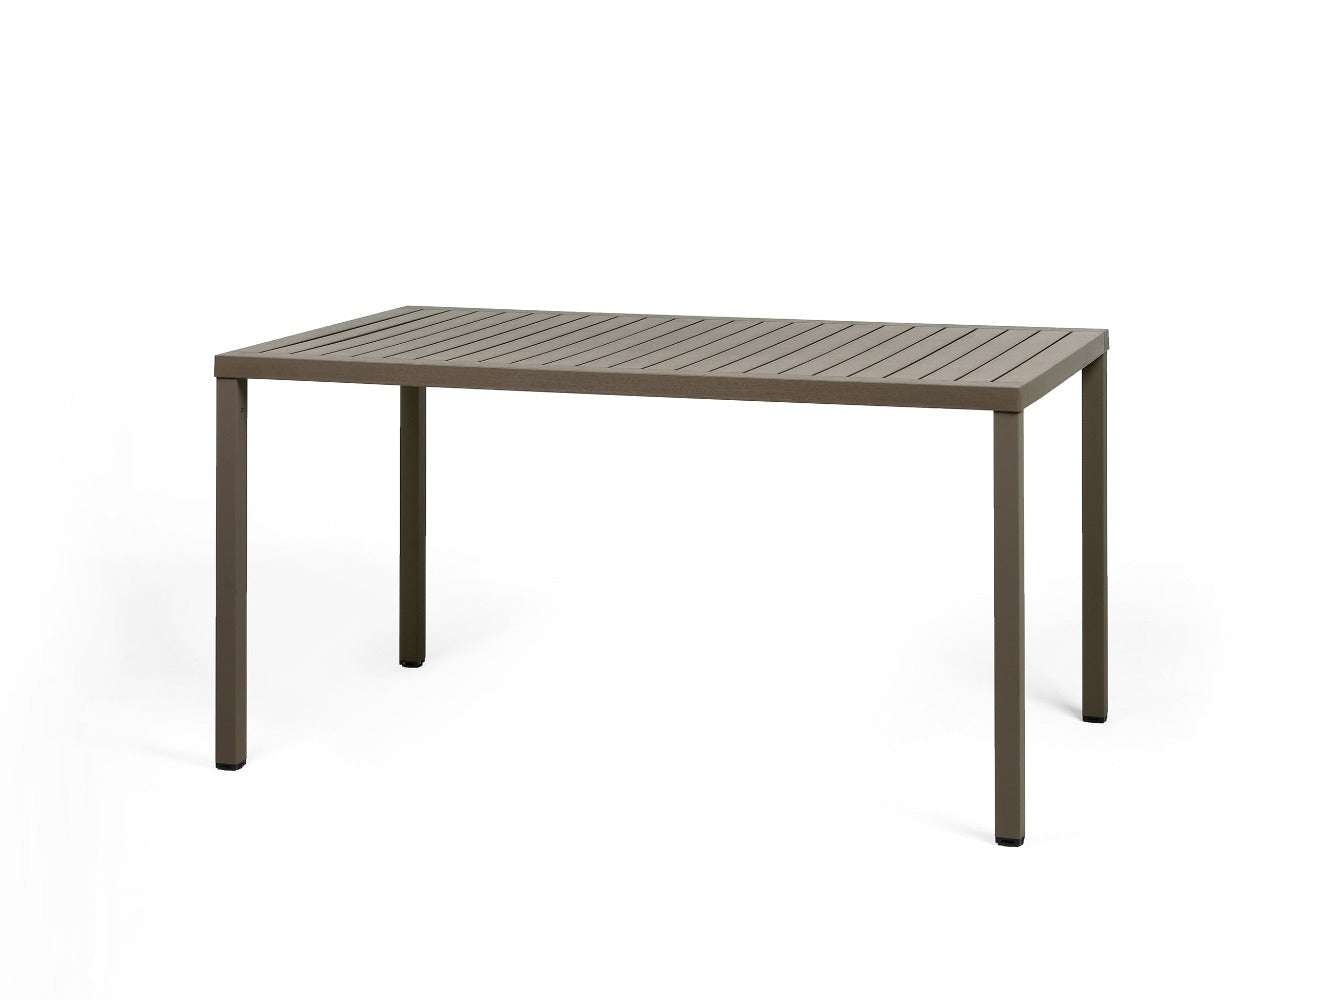 NARDI CUBE Rectangular Table - [140 x 80 cm]